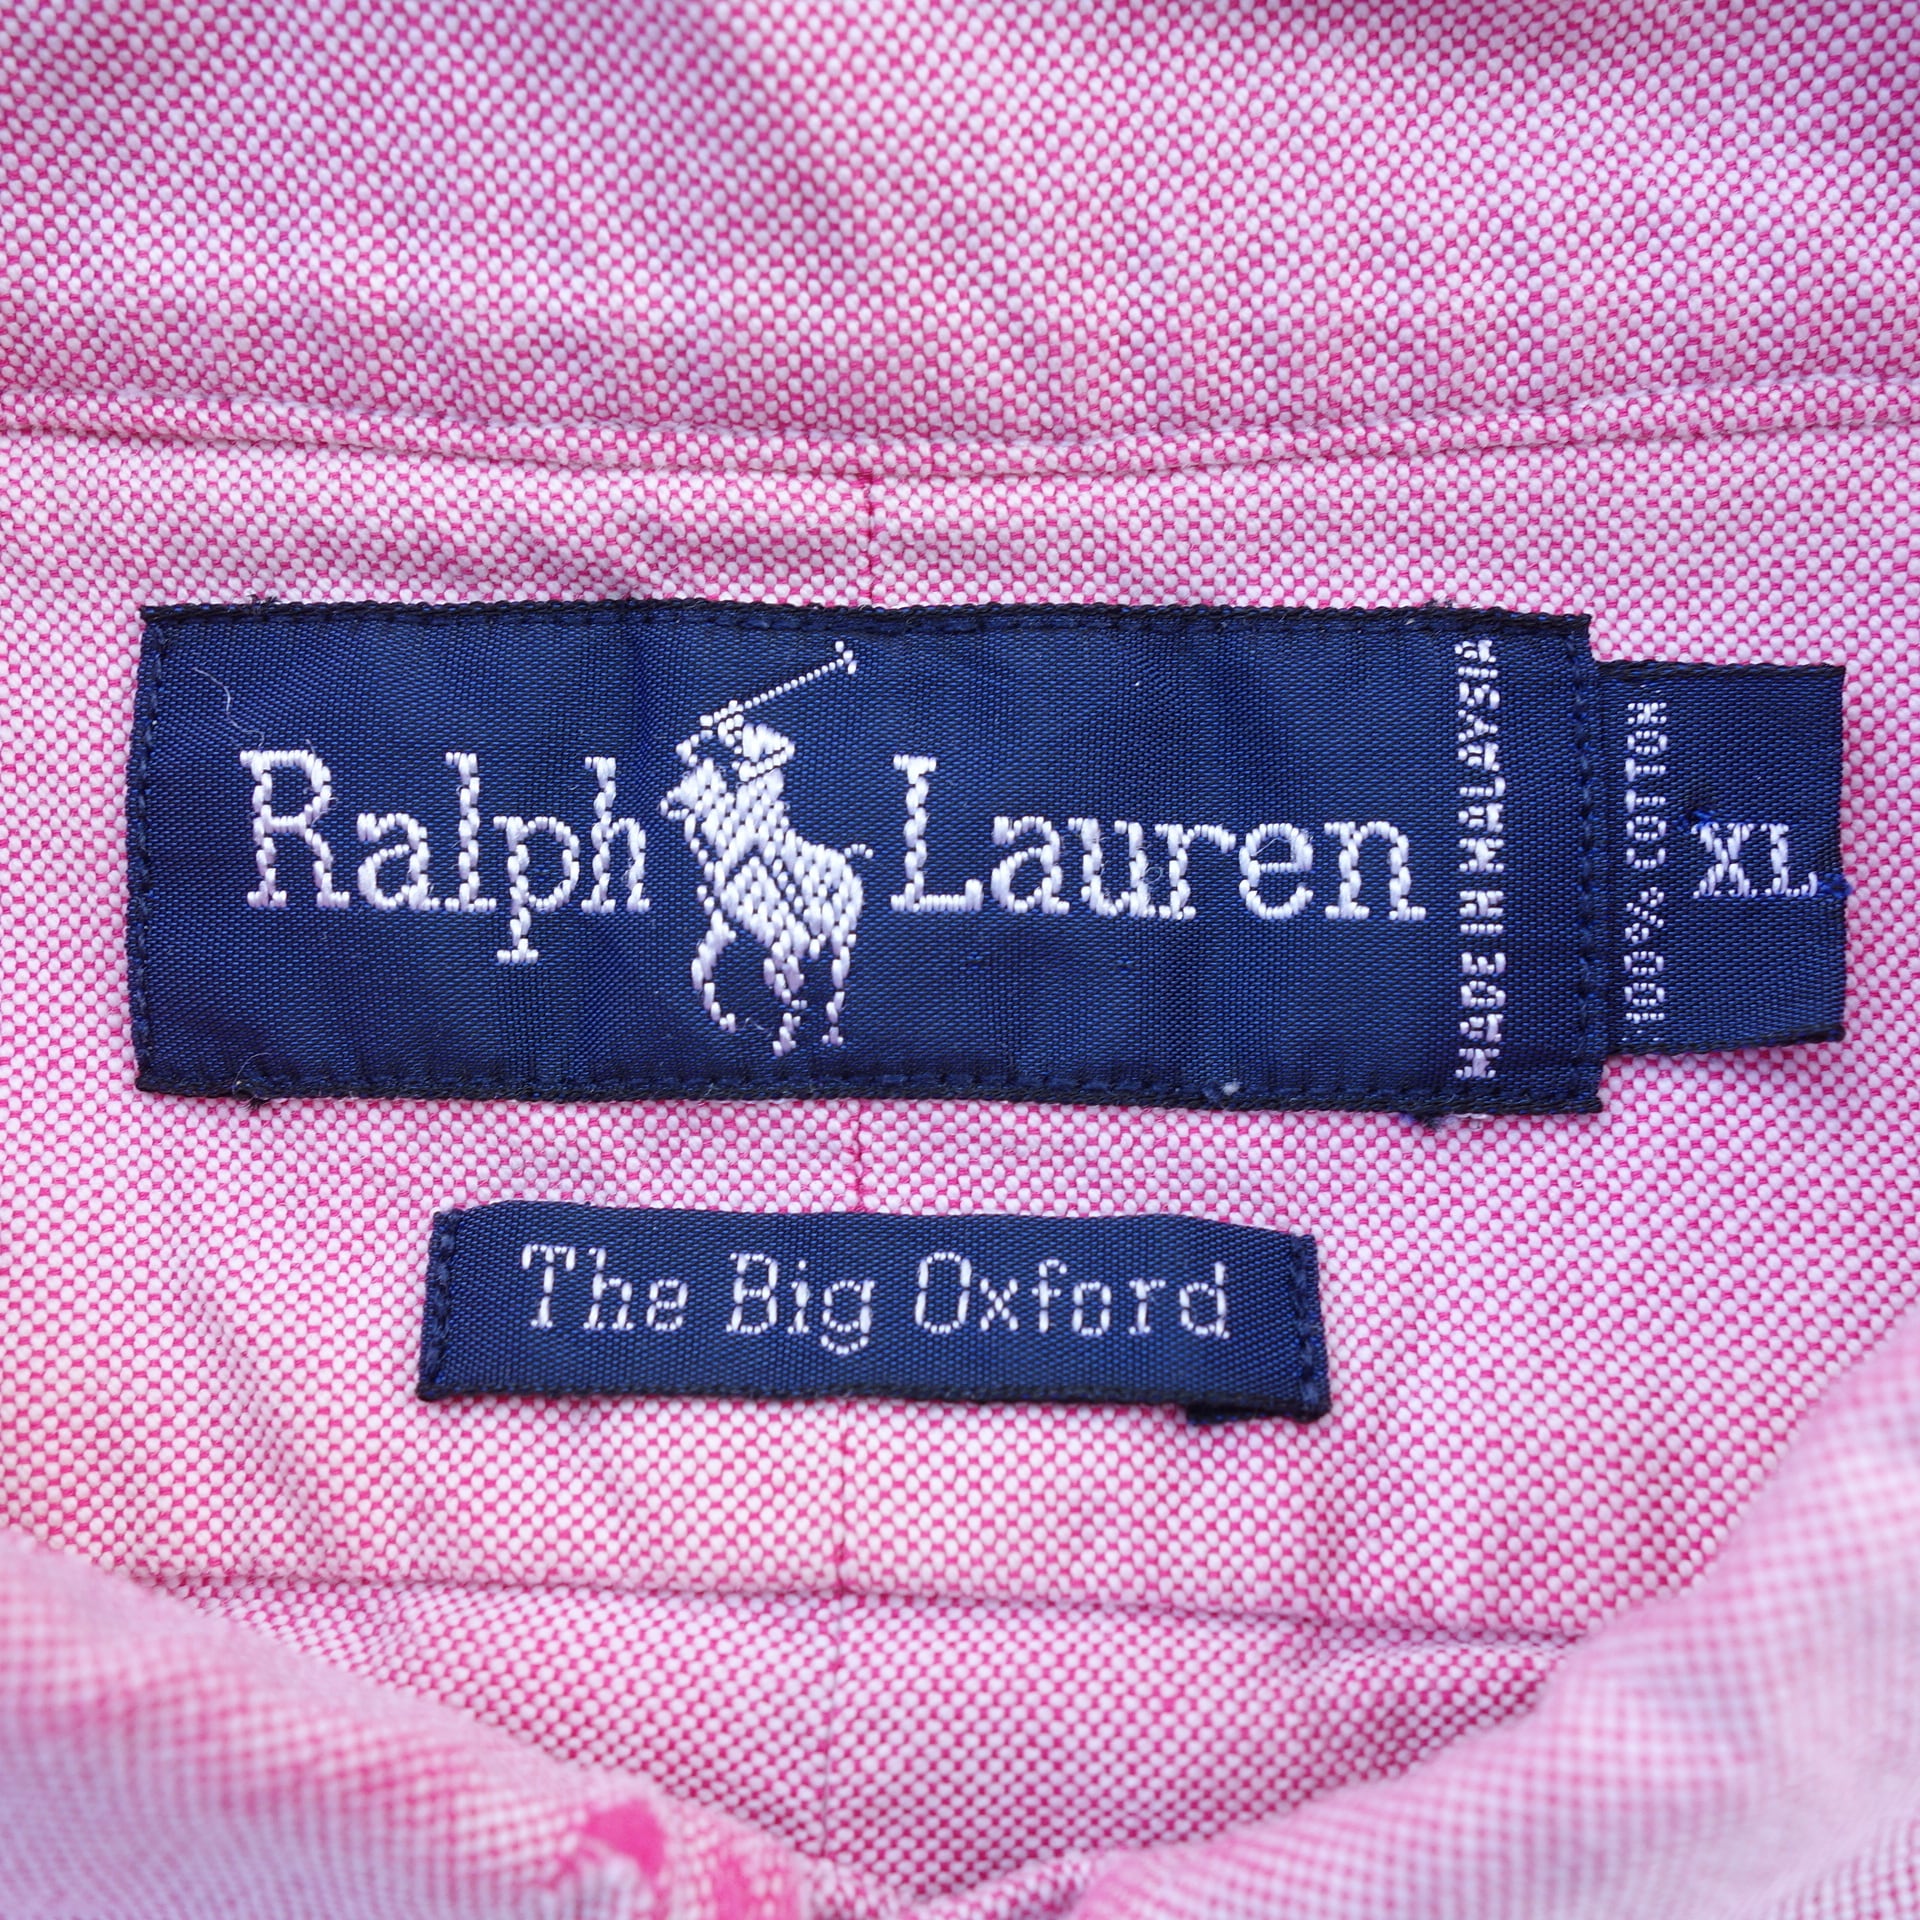 90's POLO RALPH LAUREN(ポロ ラルフ ローレン) BIG-SHIRT OXFORD 裾 